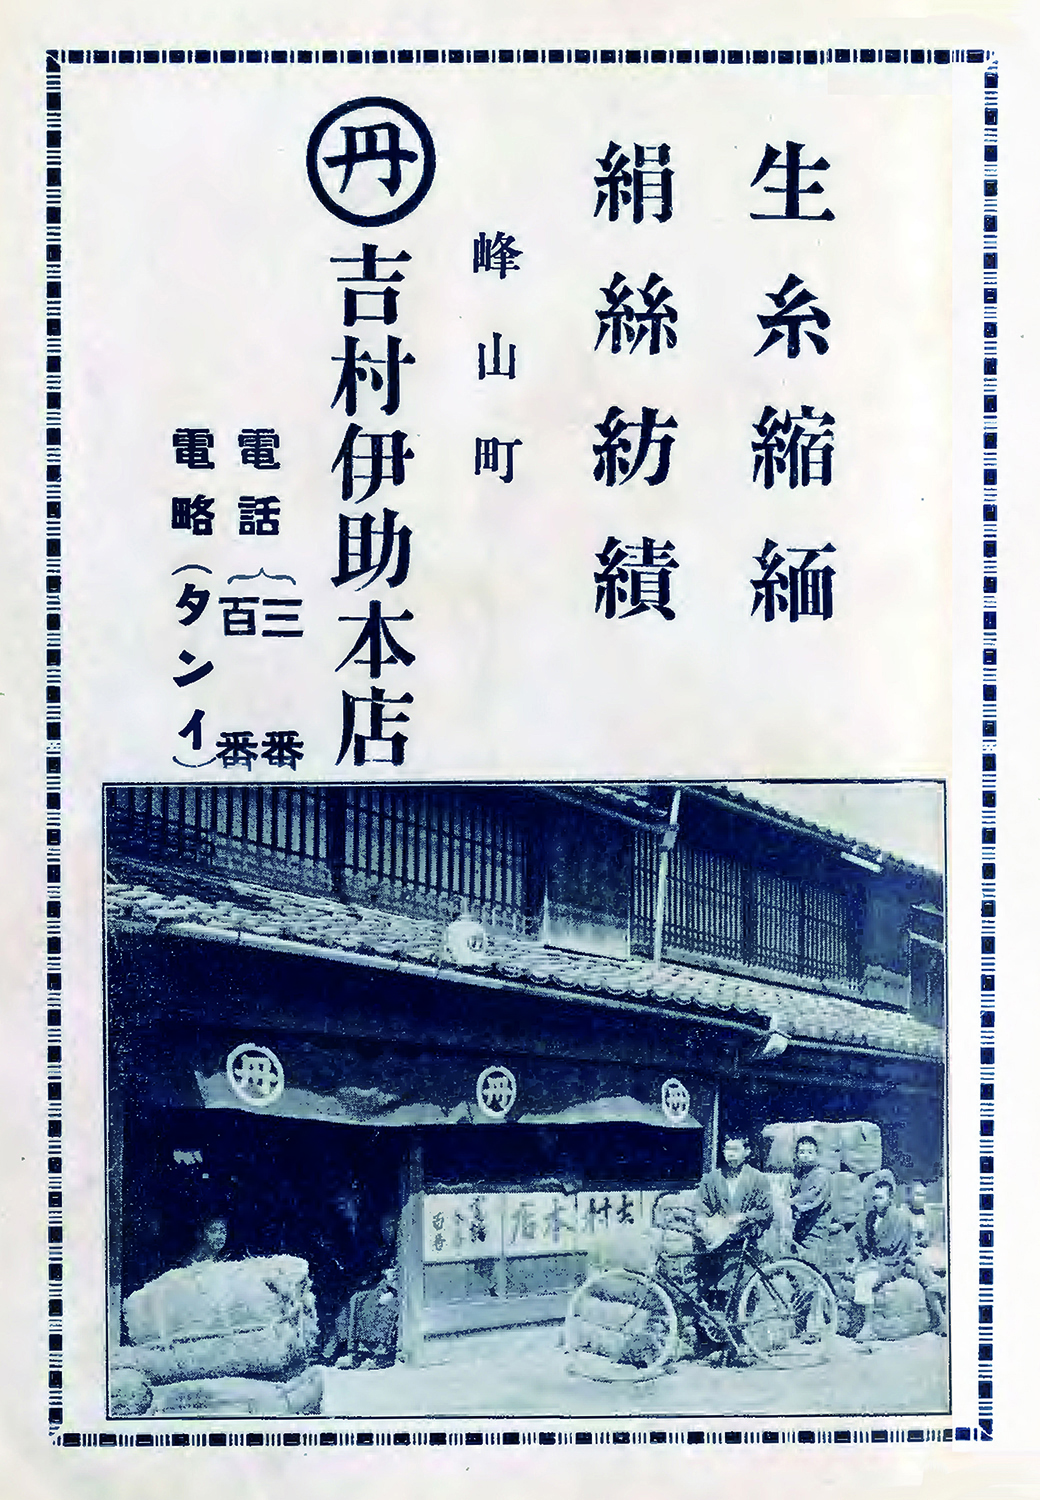 吉村伊助商店's image 1